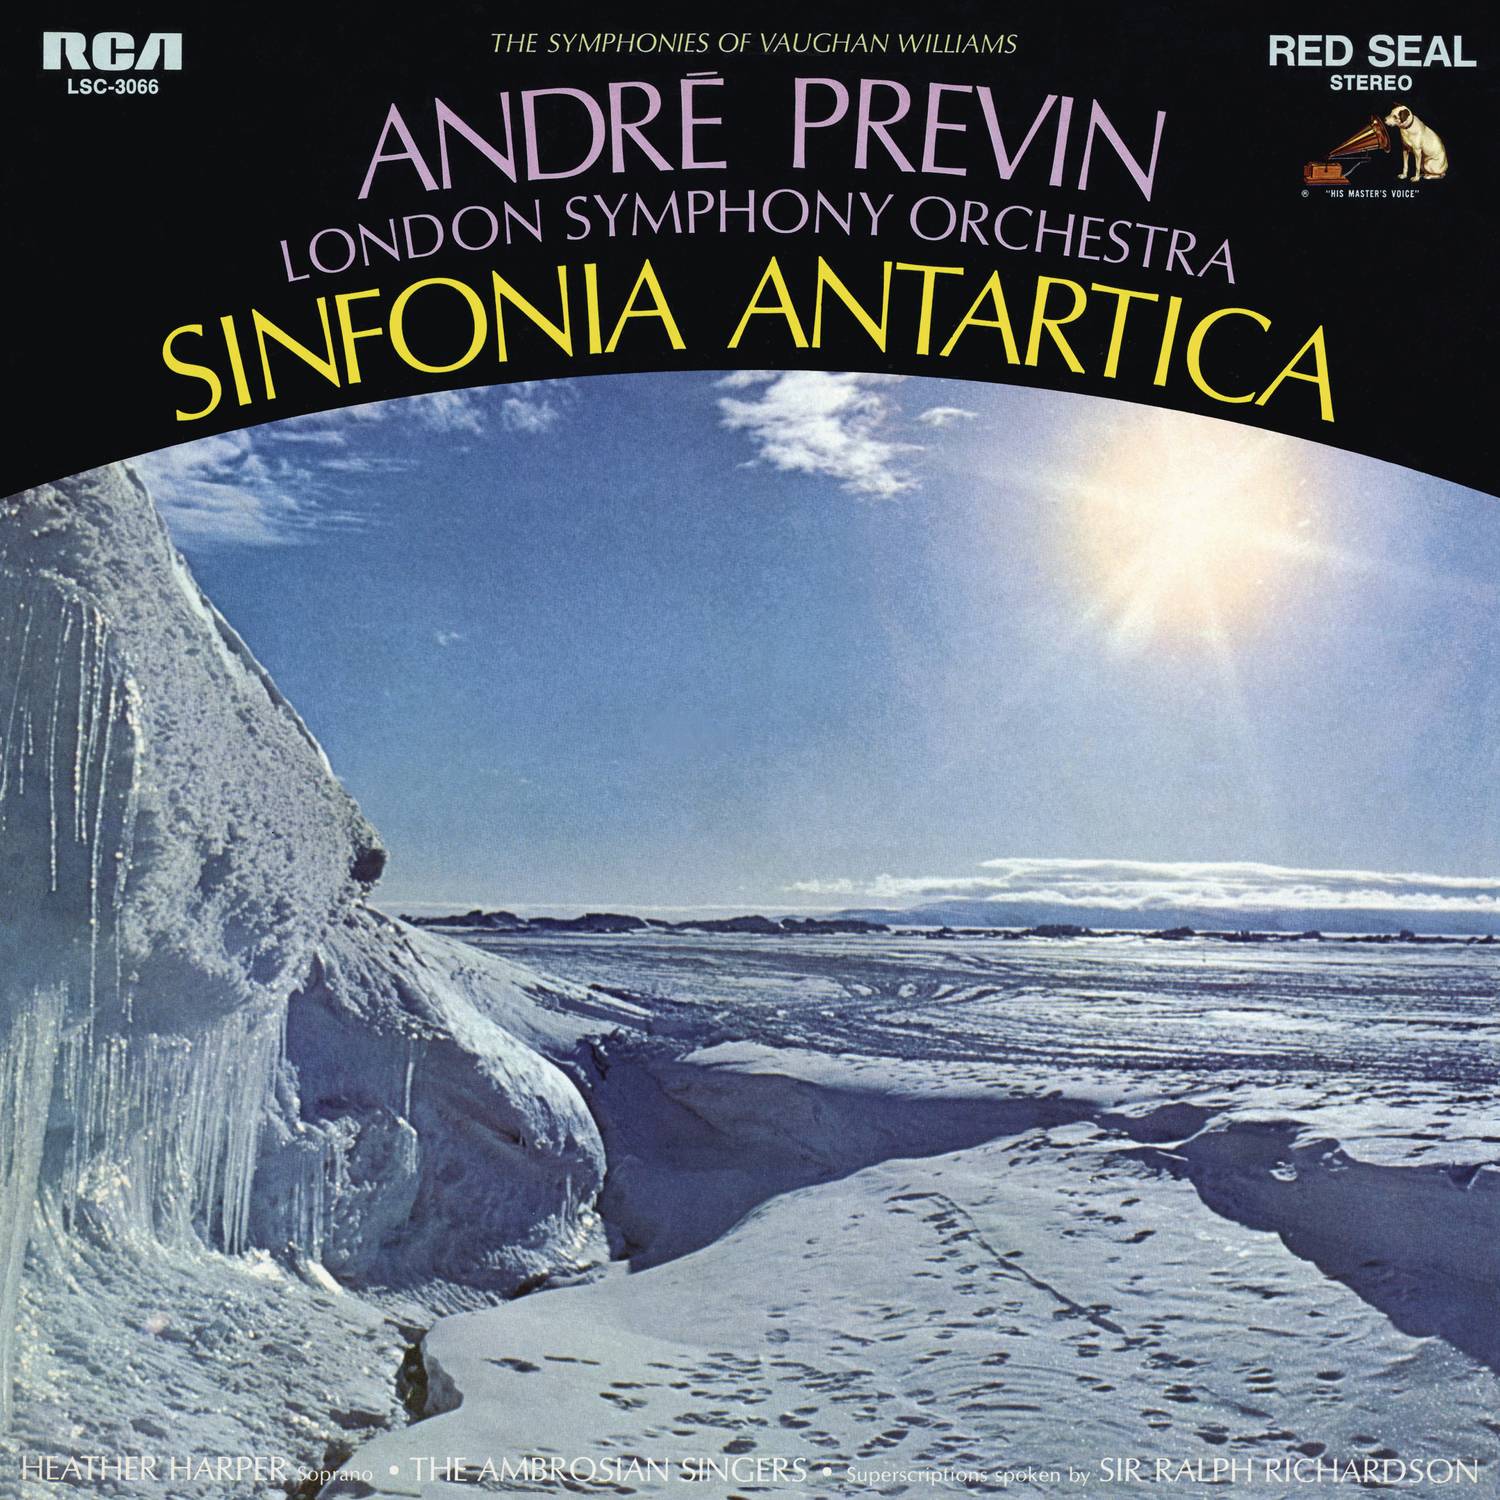 Sinfonia Antartica (Symphony No. 7):I. Prelude - Andante maestoso